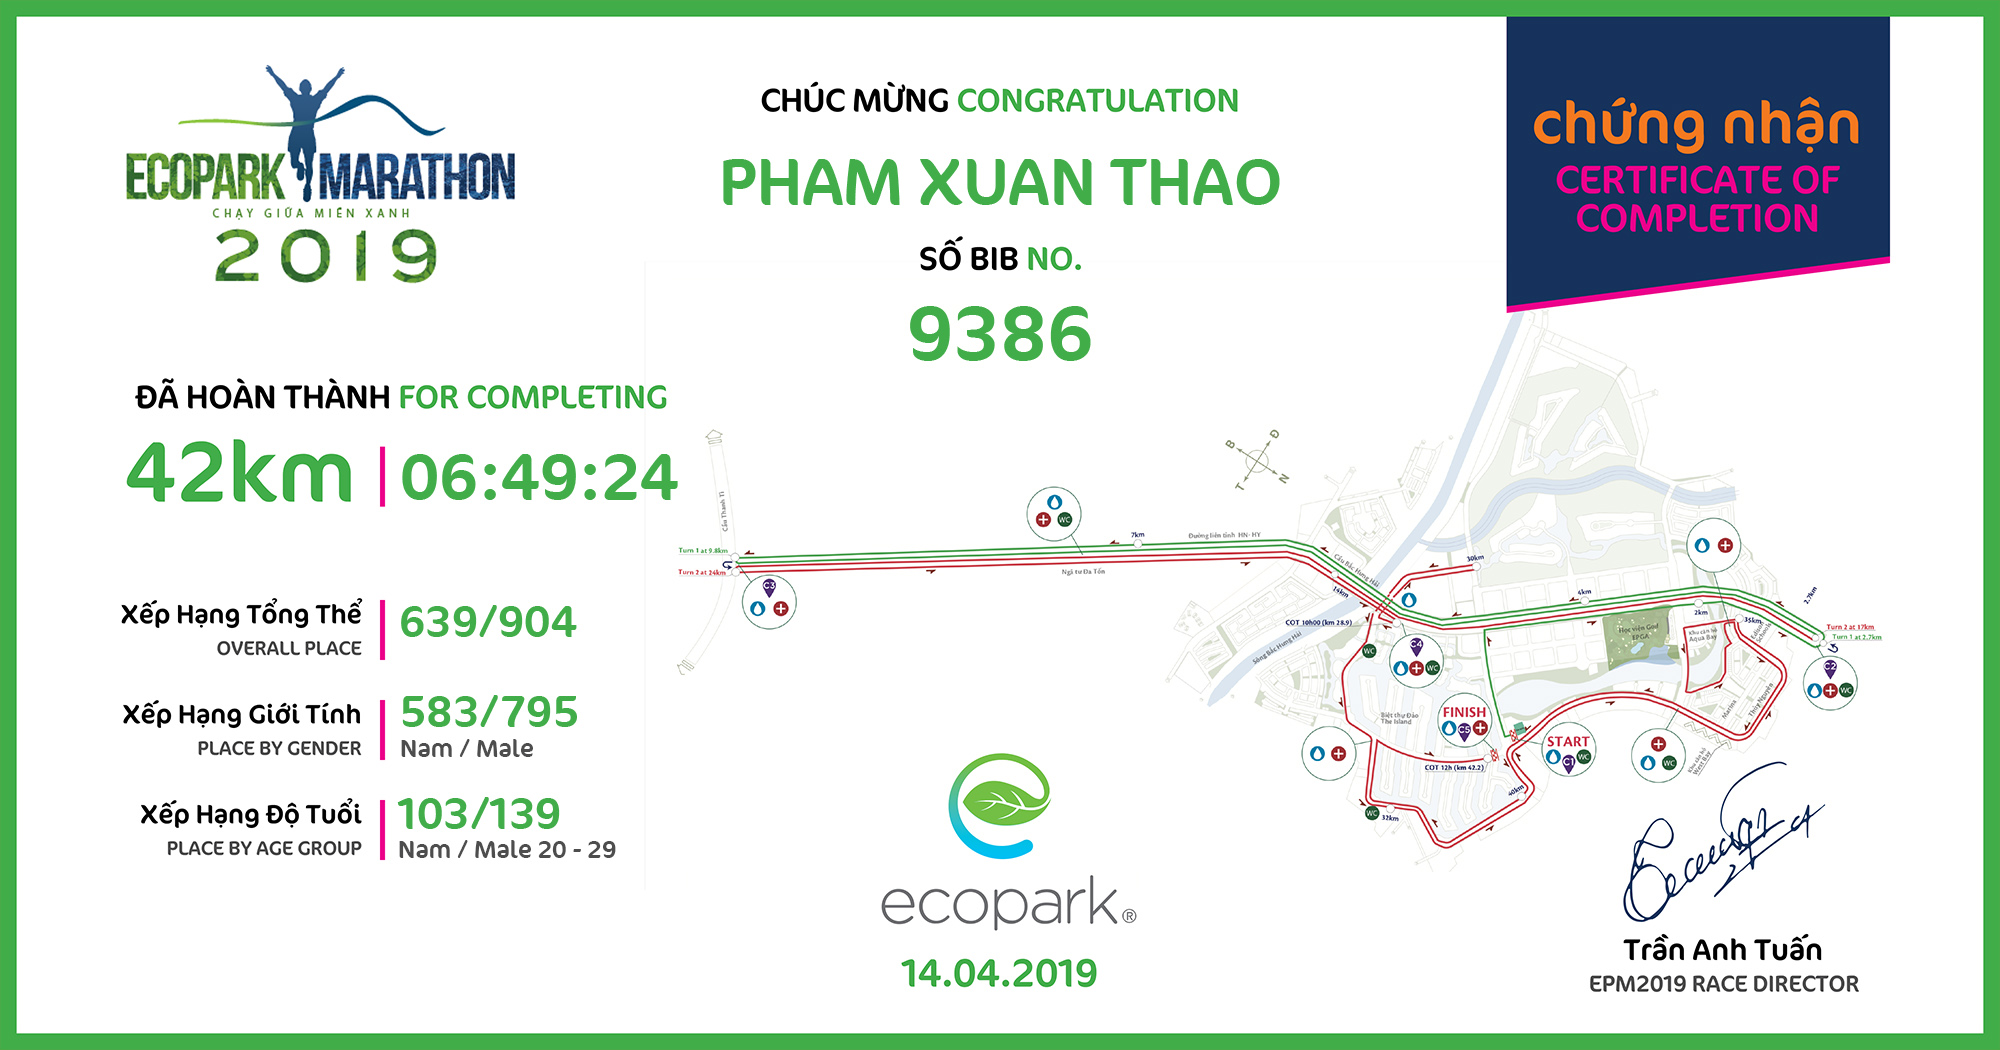 9386 - Pham Xuan Thao